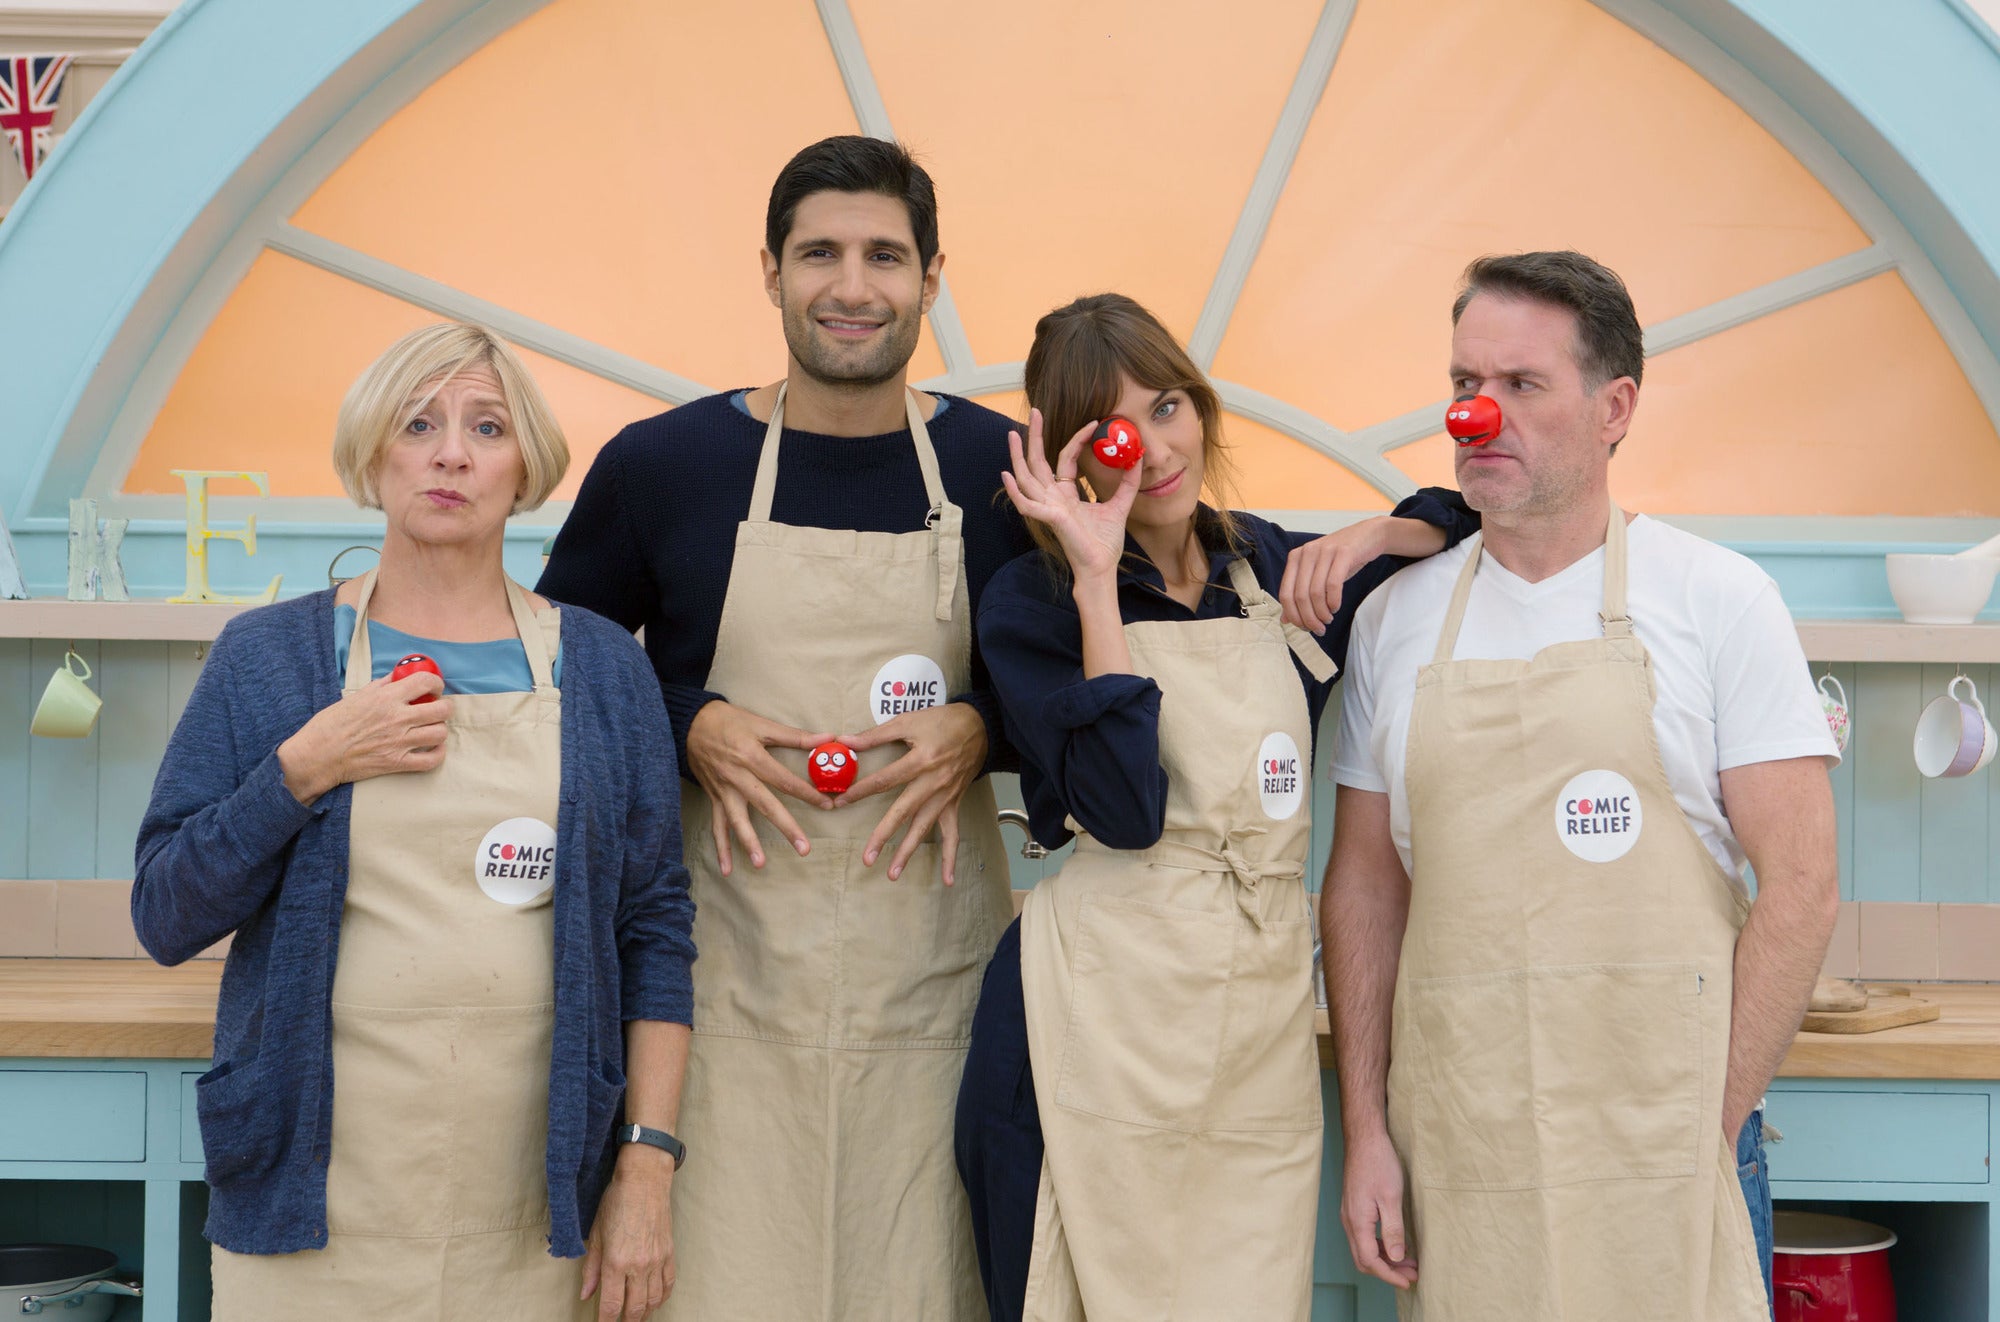 Victoria Wood, Kayvan Novak, Alexa Chung, Chris Moyles in the Bake Off tent